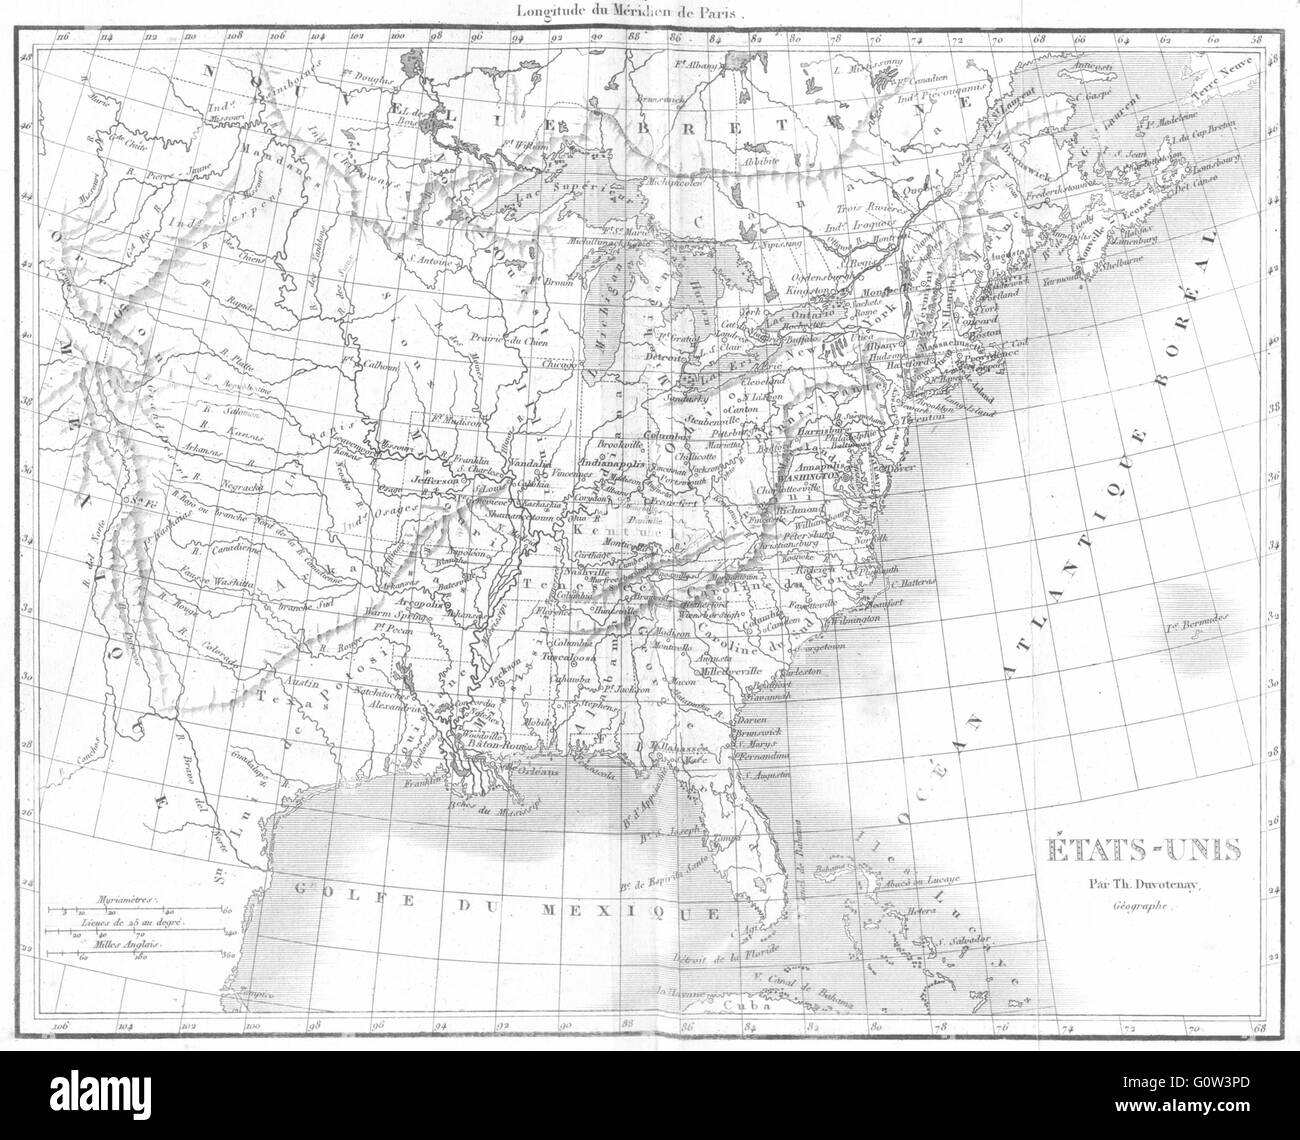 USA: Amerique: Etats-Unis, 1875 antique map Stock Photo